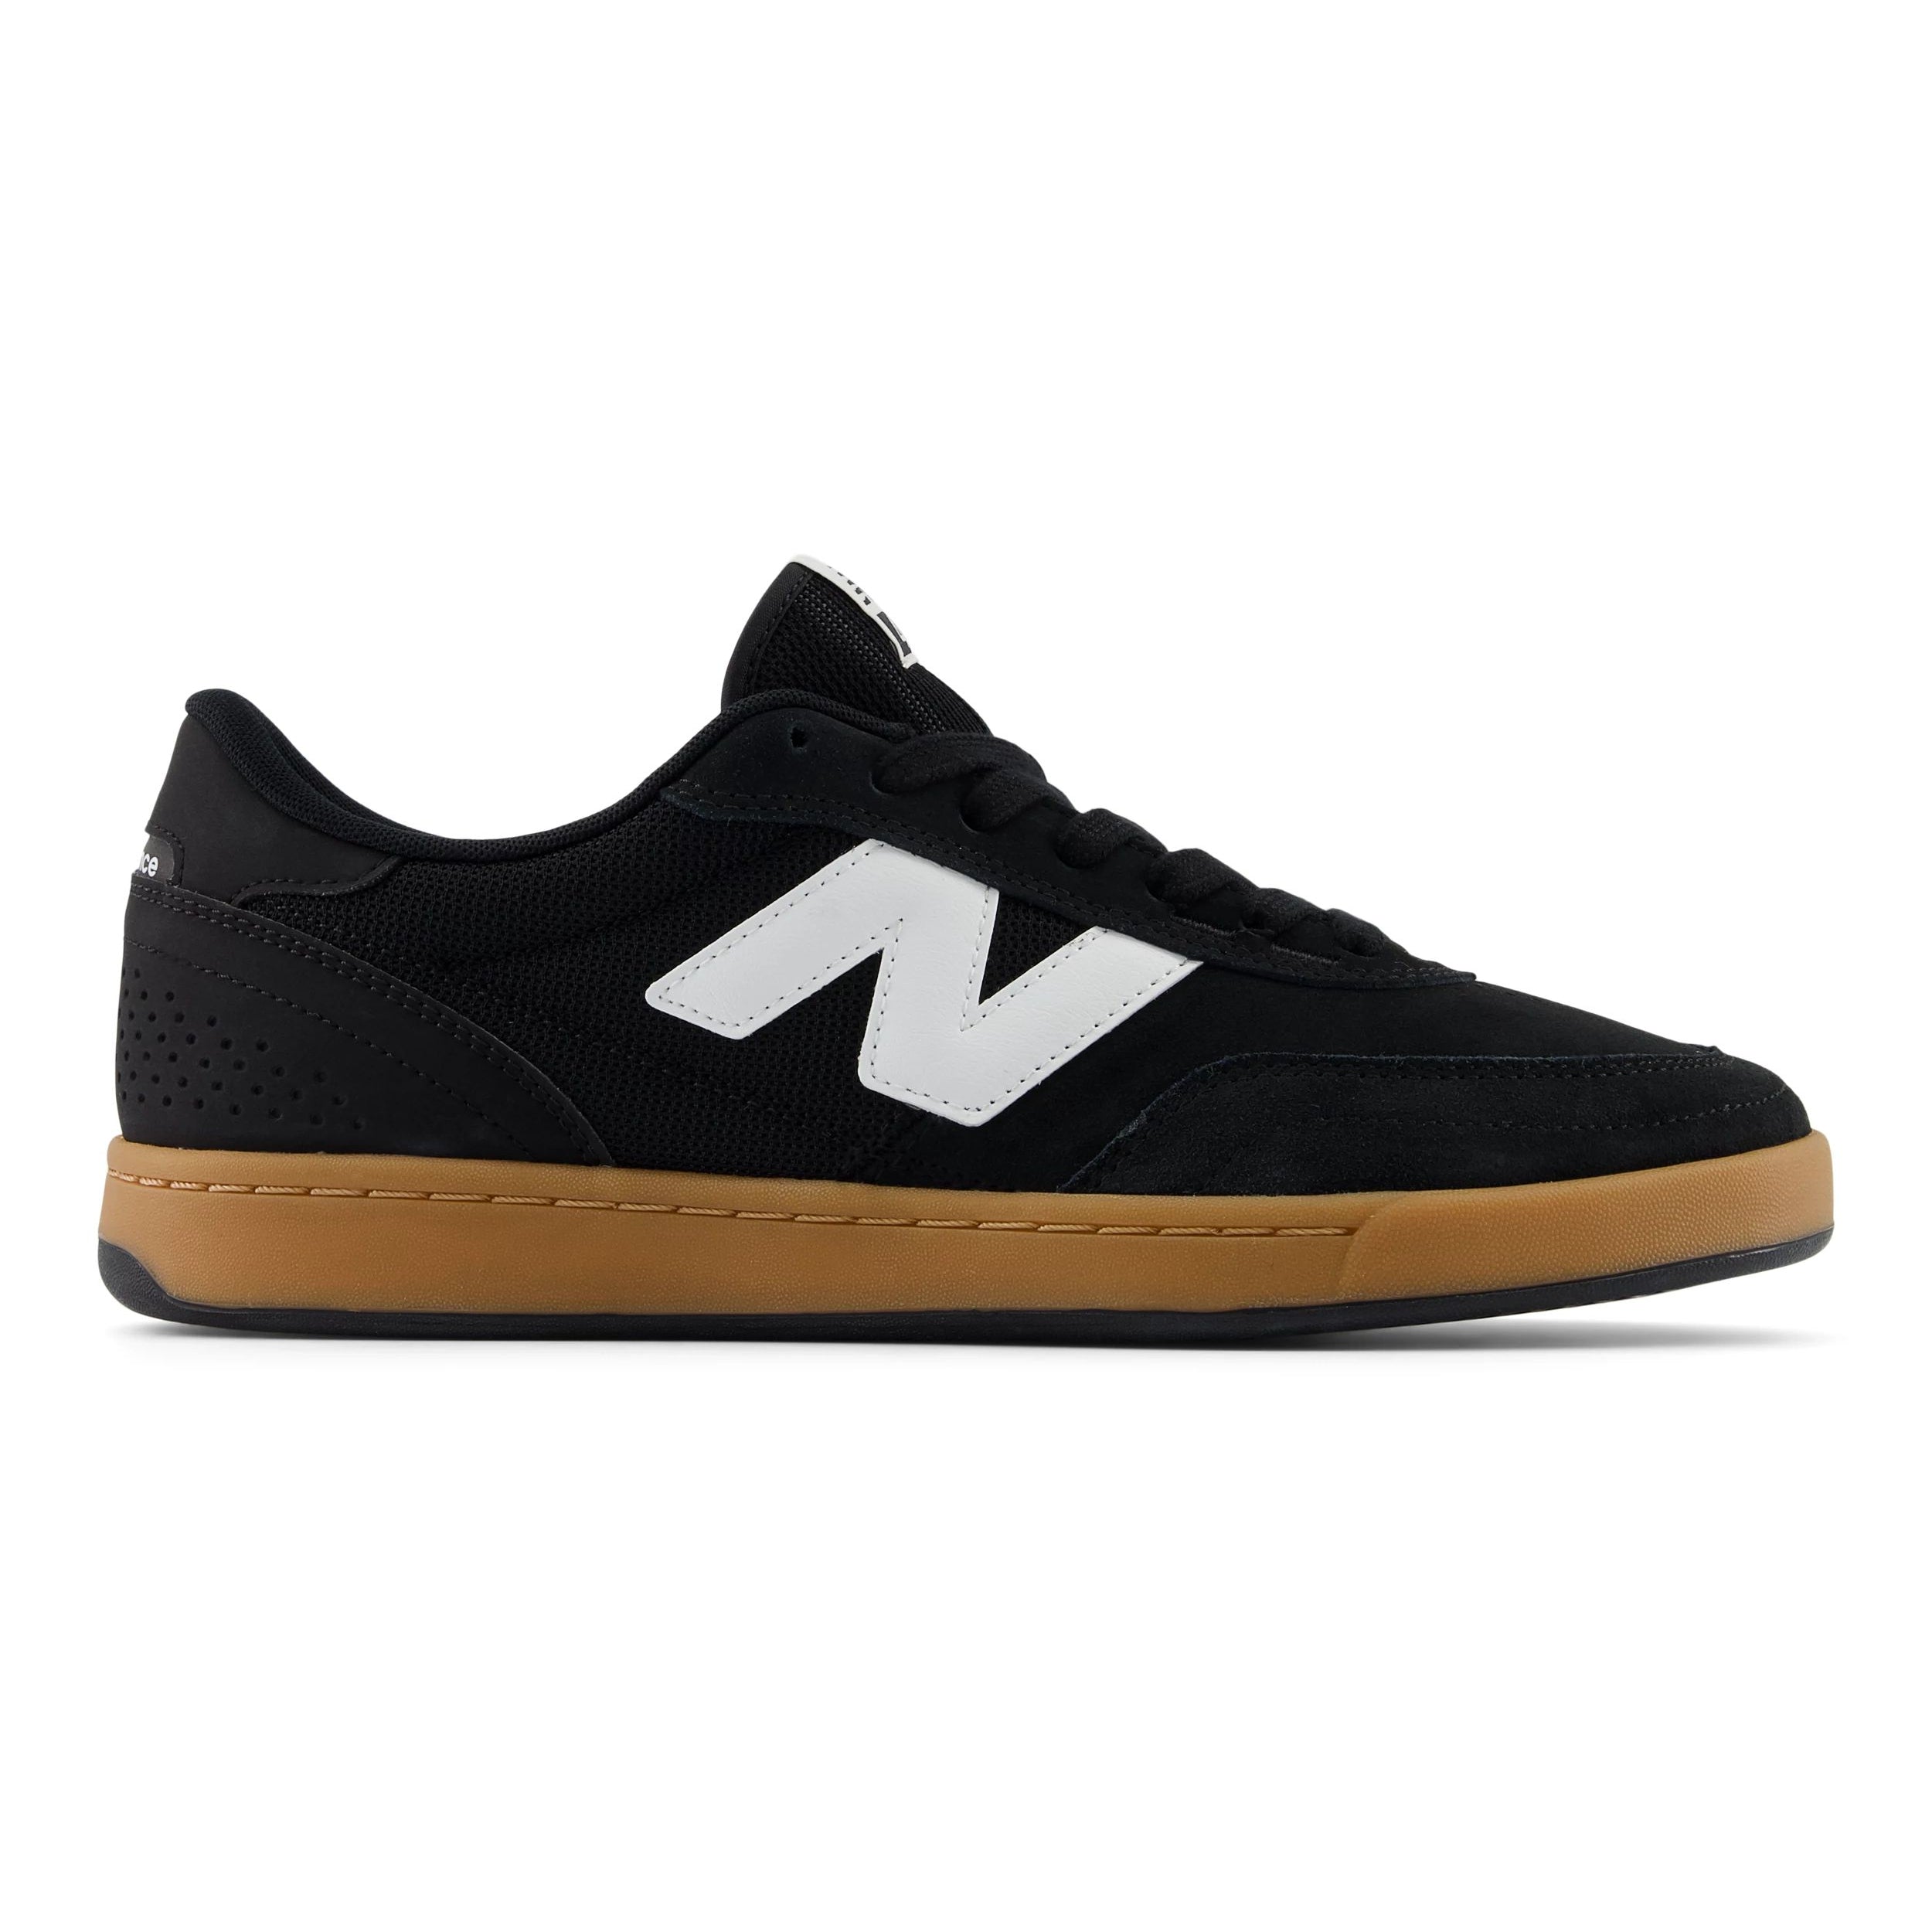 New Balance Numeric 440v2 Skateboard Shoe - Black/Gum